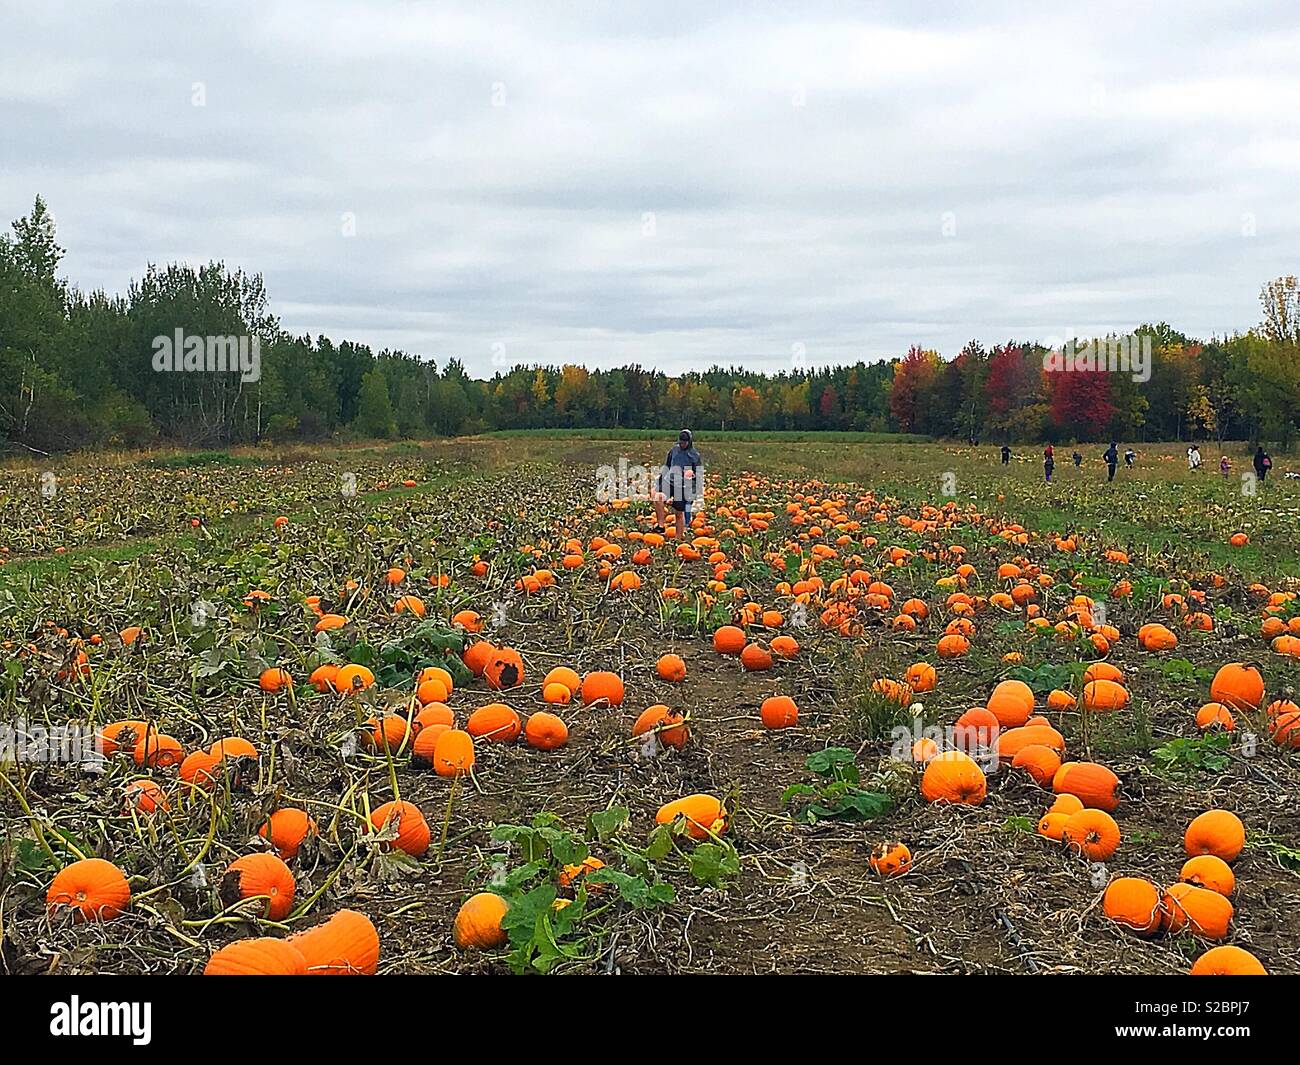 Pumpkin picking in a field of pumpkins during autumn season Stock Photo